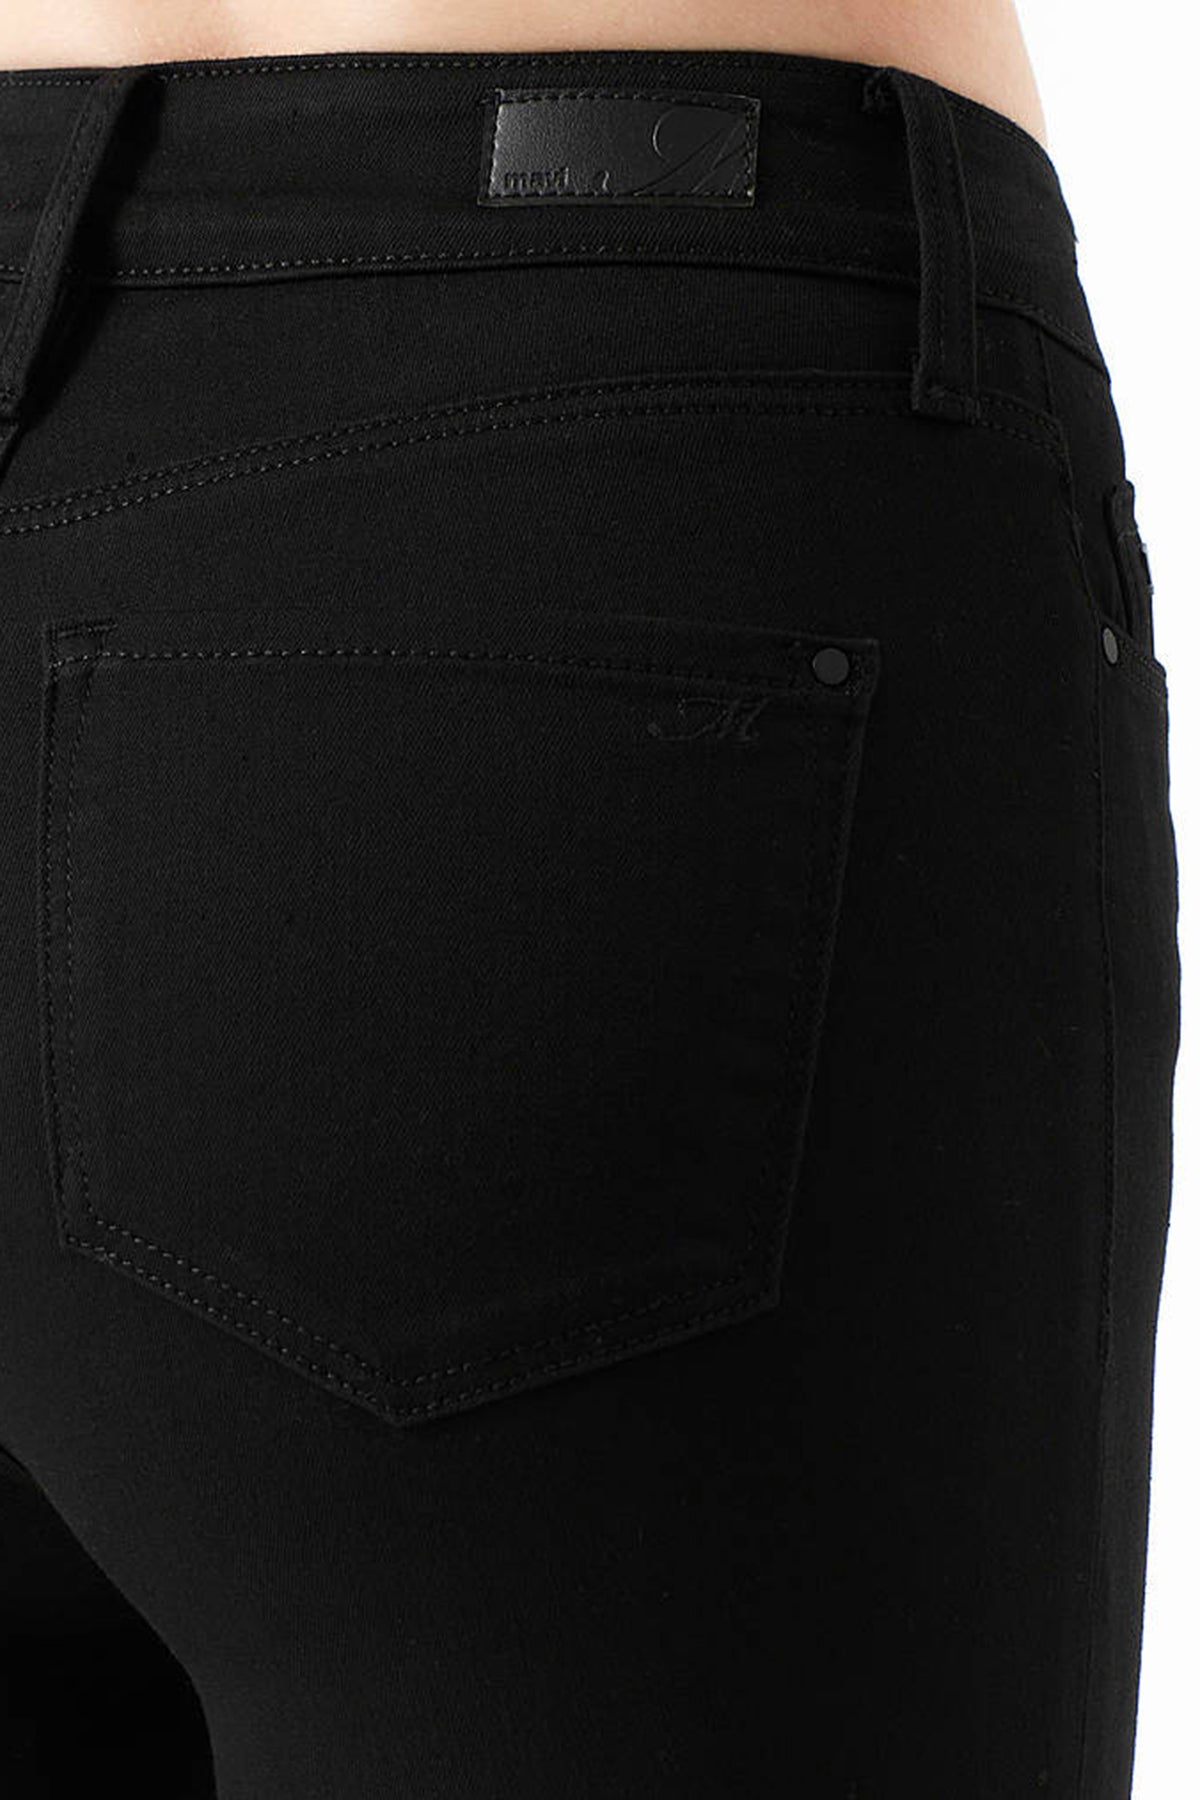 Mavi A.C.A.İ.P Pamuklu Yüksek Bel Süper Skinny Jeans Bayan Kot Pantolon 101065-31103 SİYAH